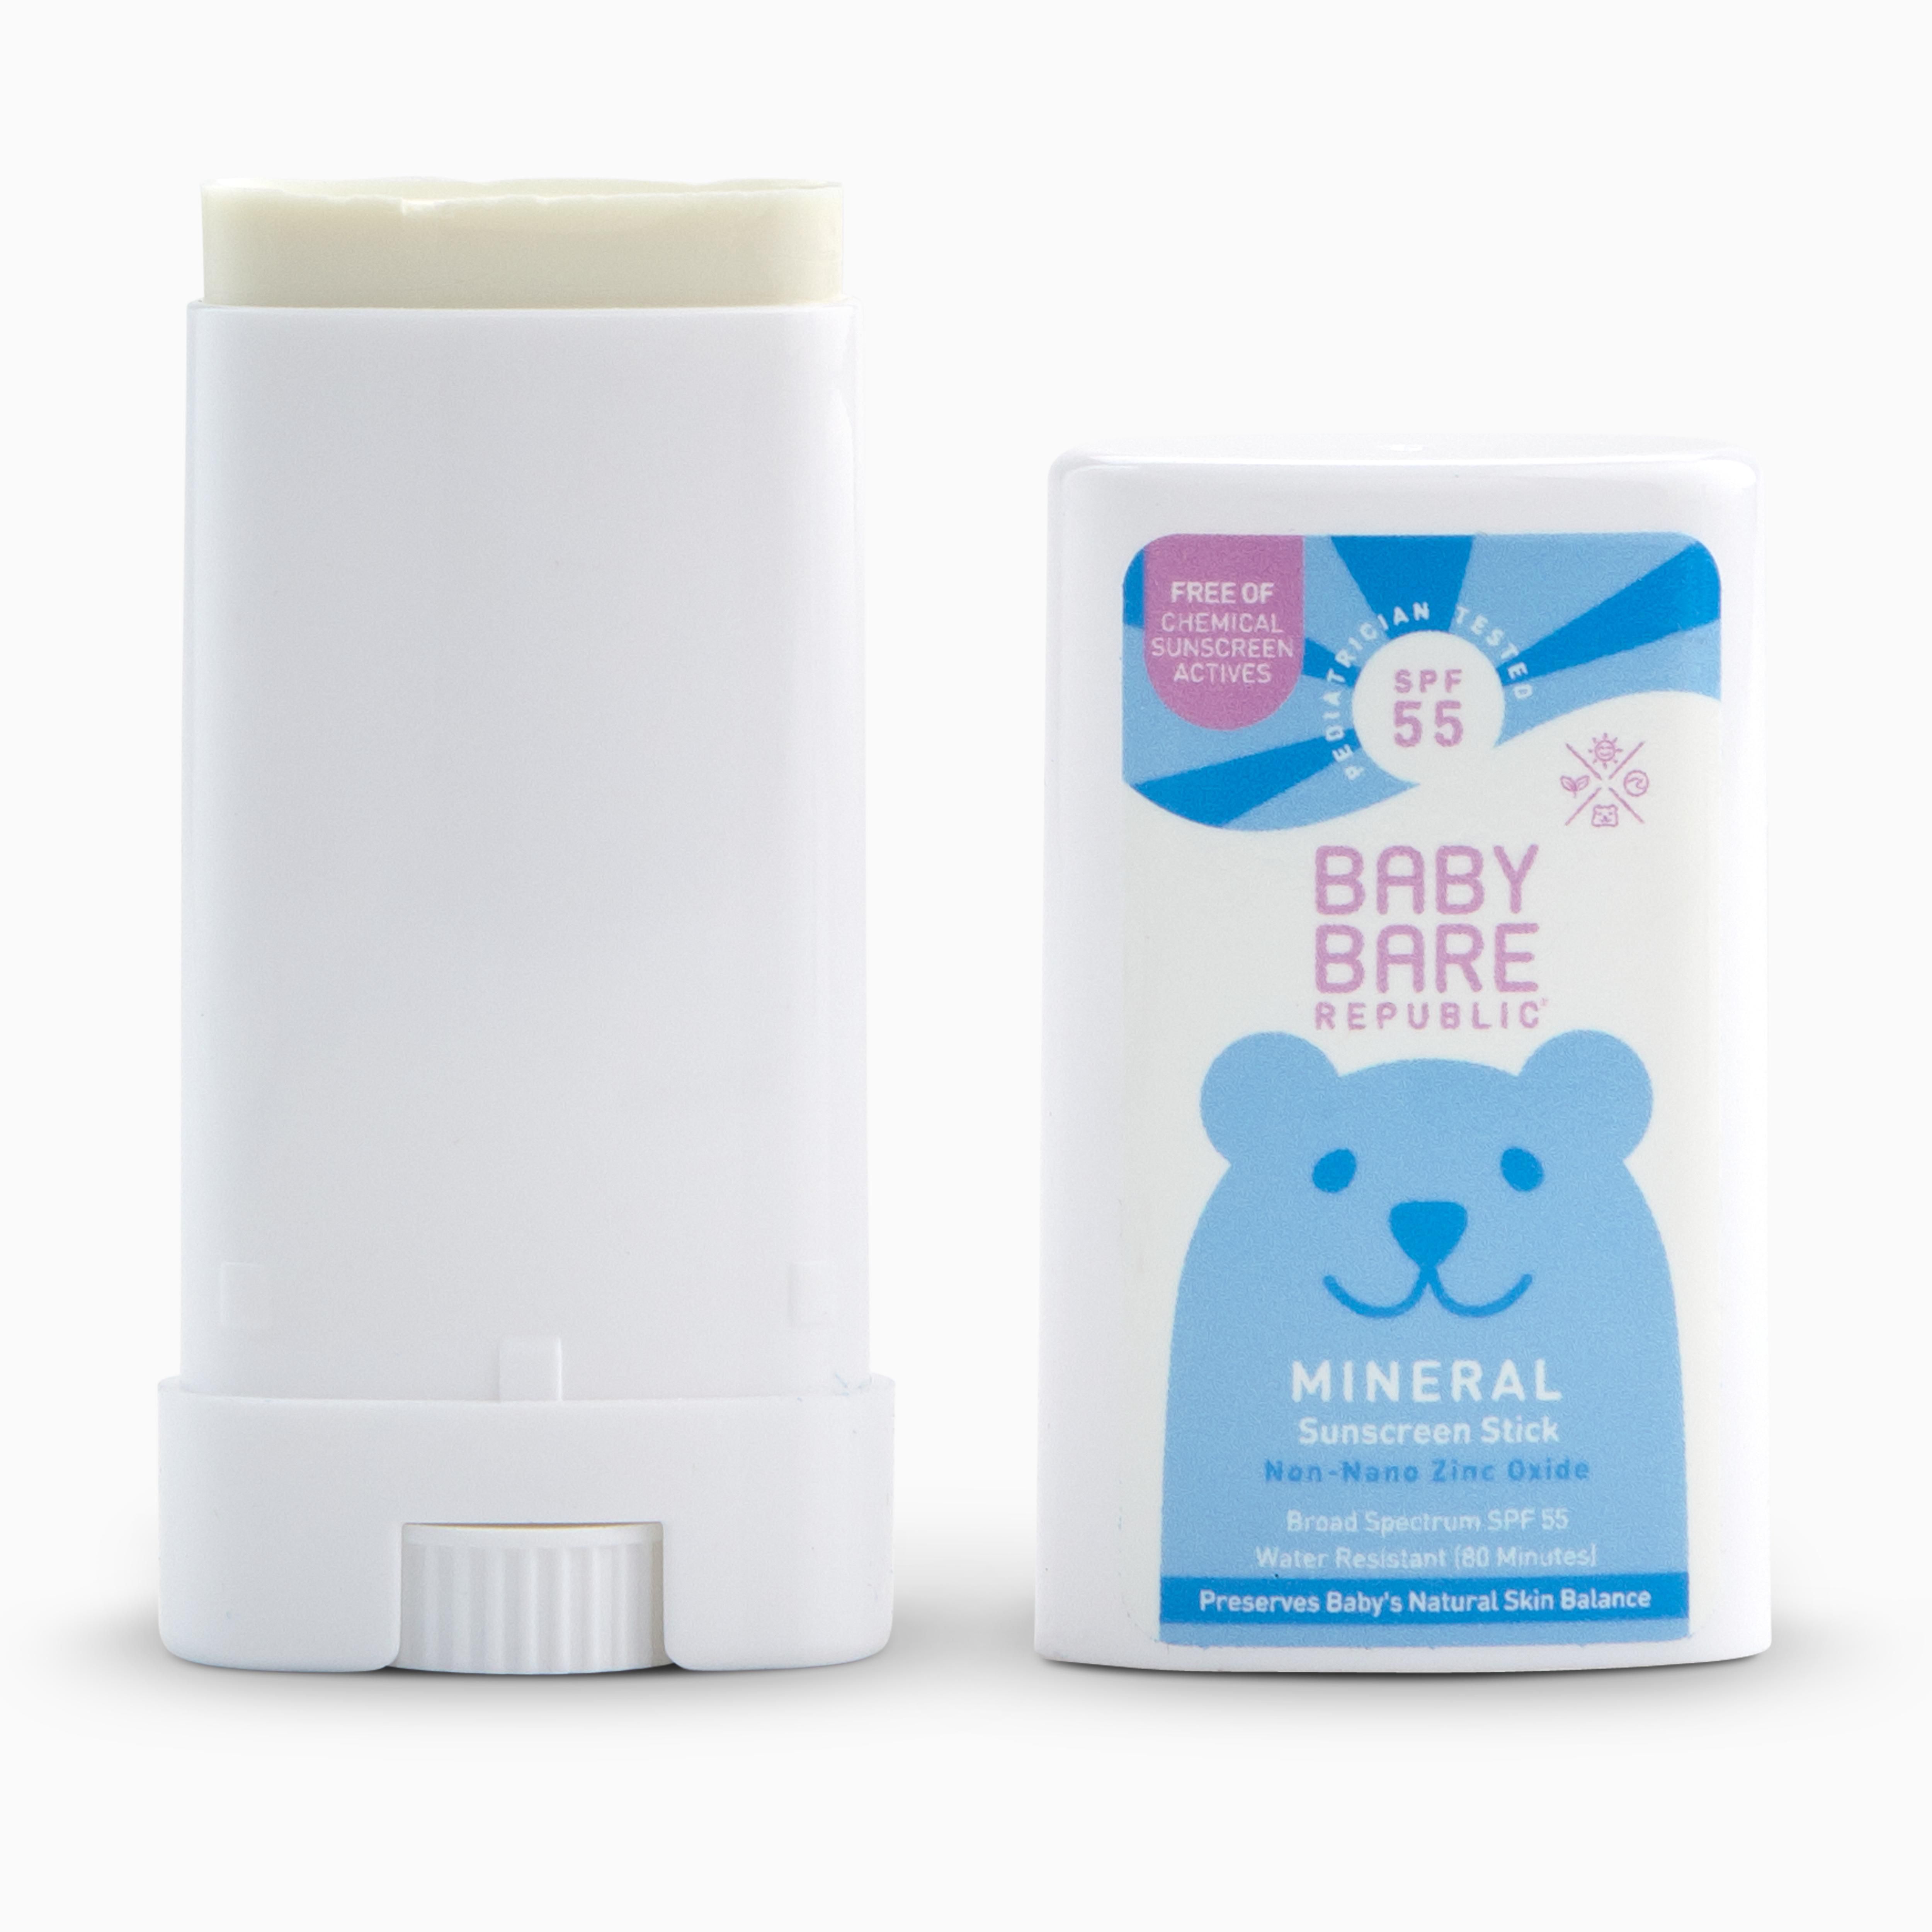 Bare Republic Mineral Baby Sunscreen Face & Body Stick, Unscented, SPF 50 - 0.5 oz